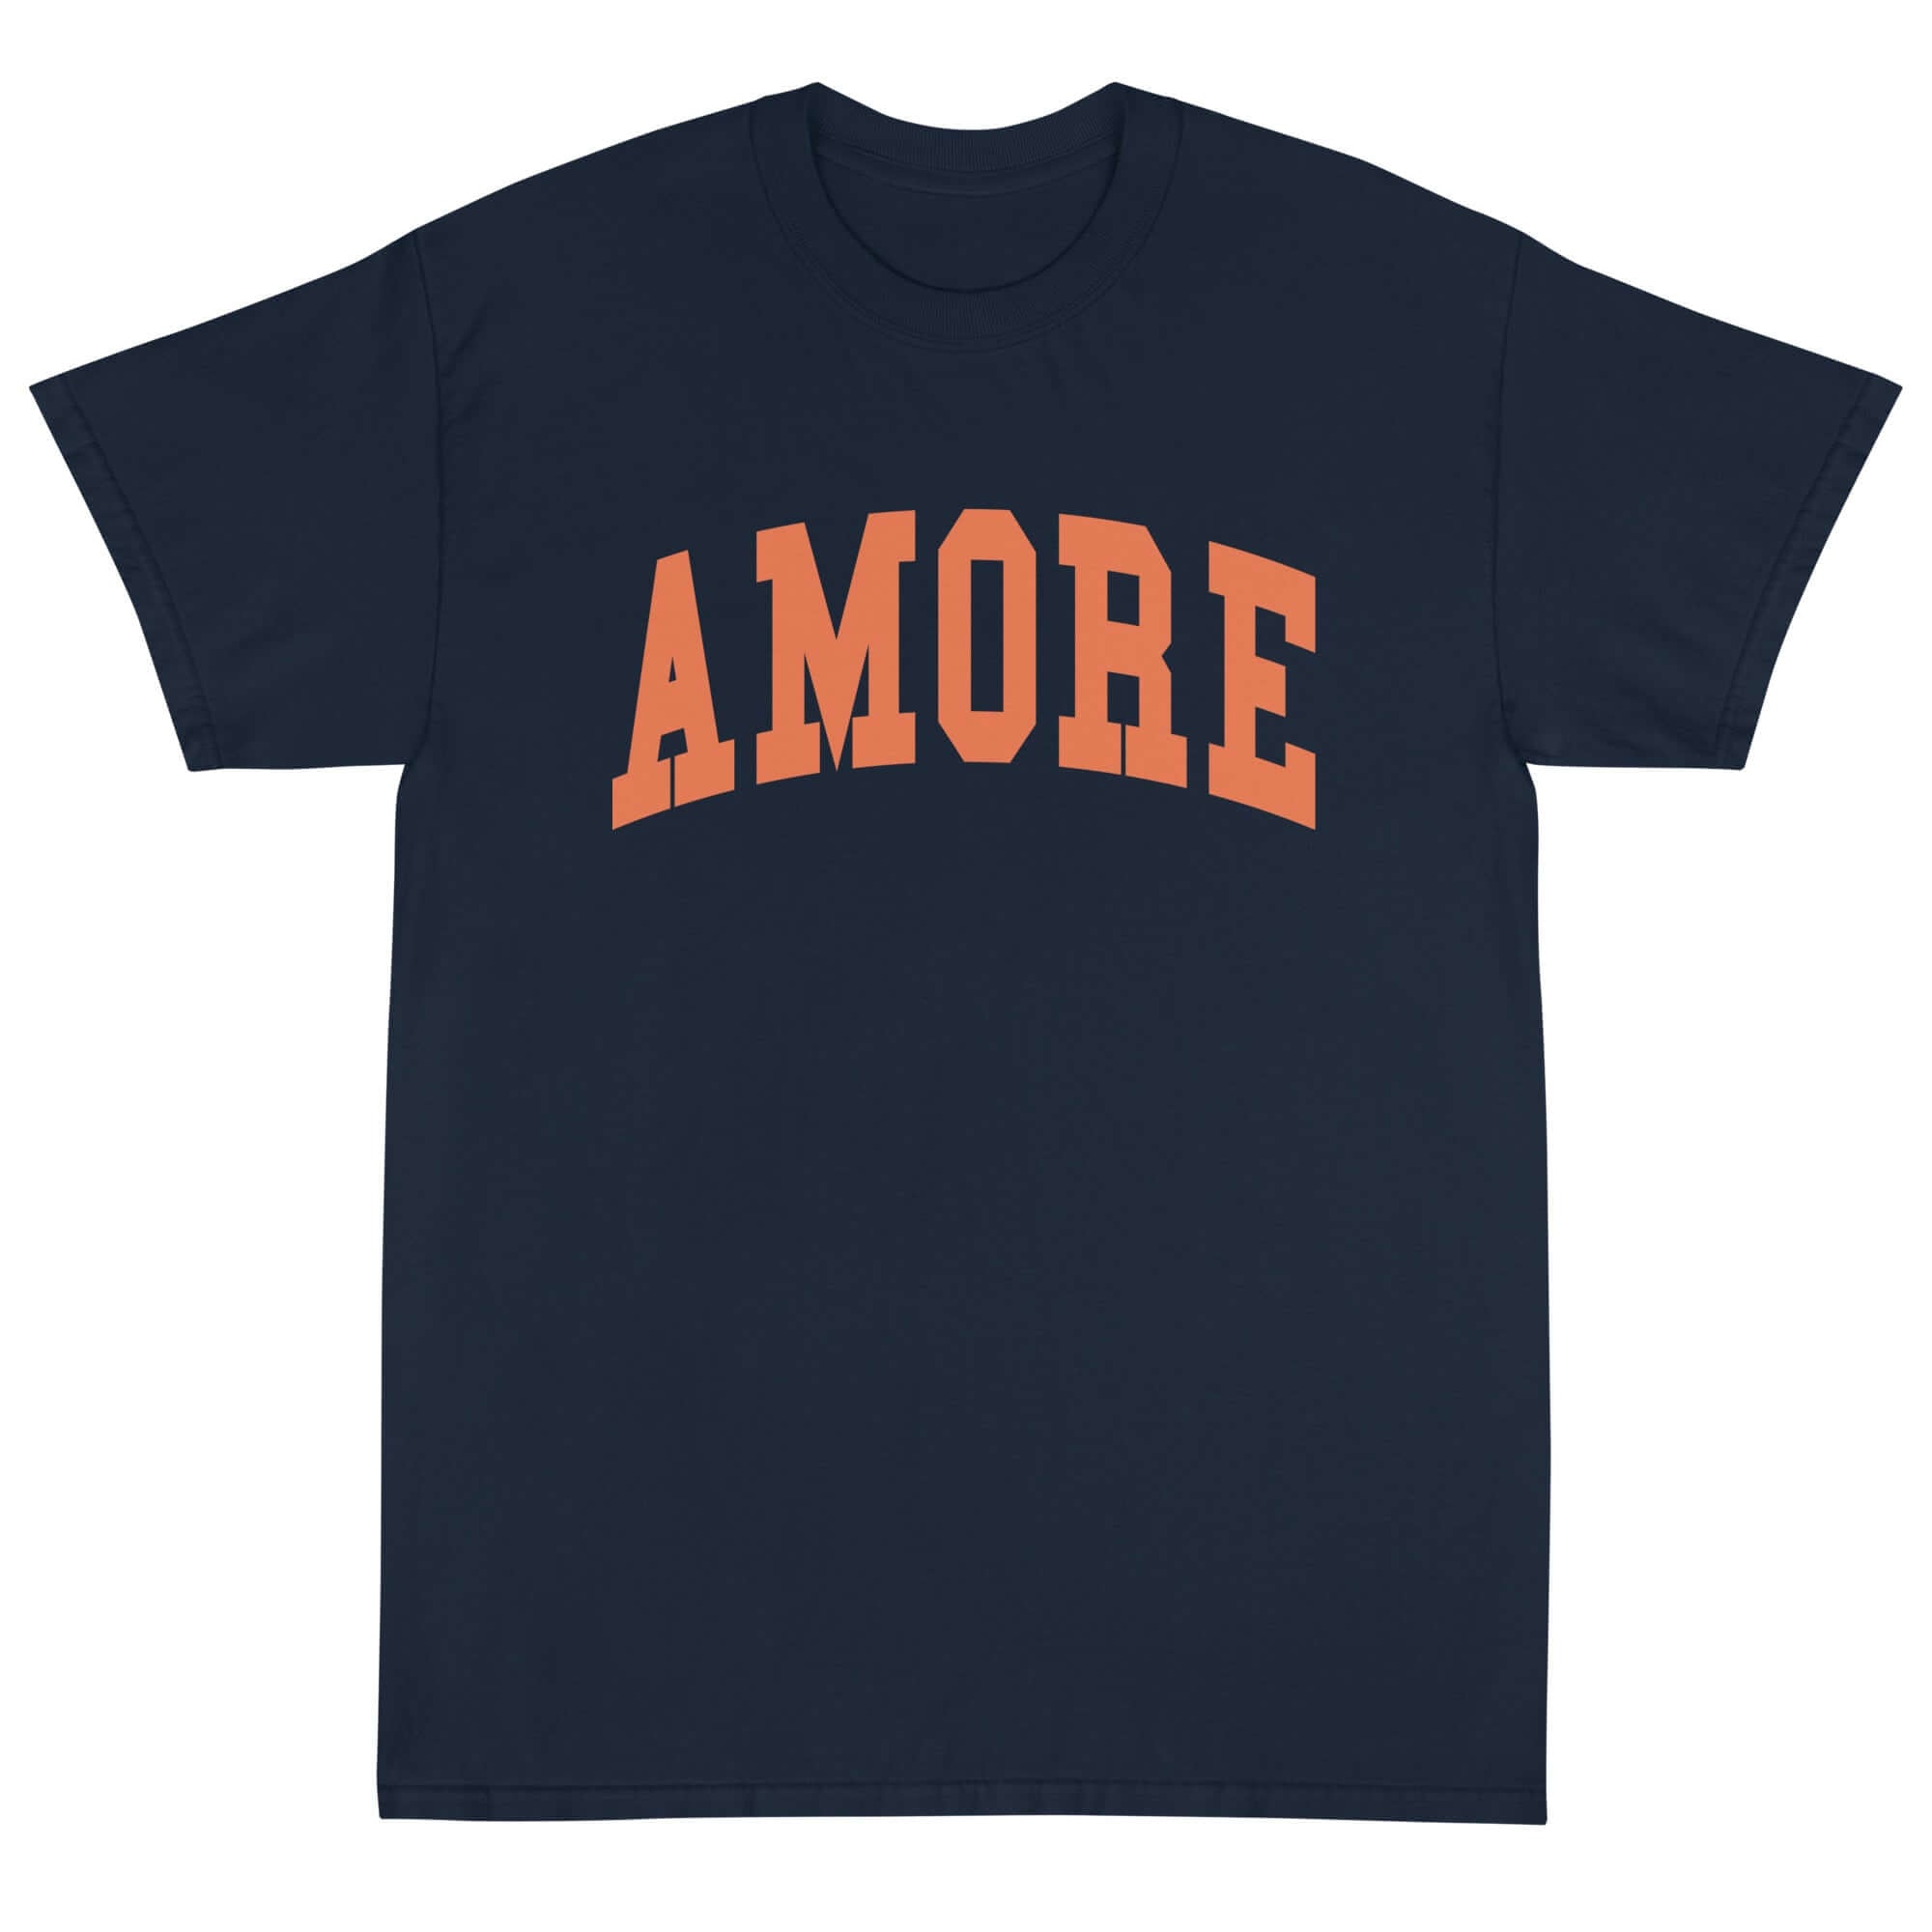 Amore - Custom t-shirt - The Refined Spirit